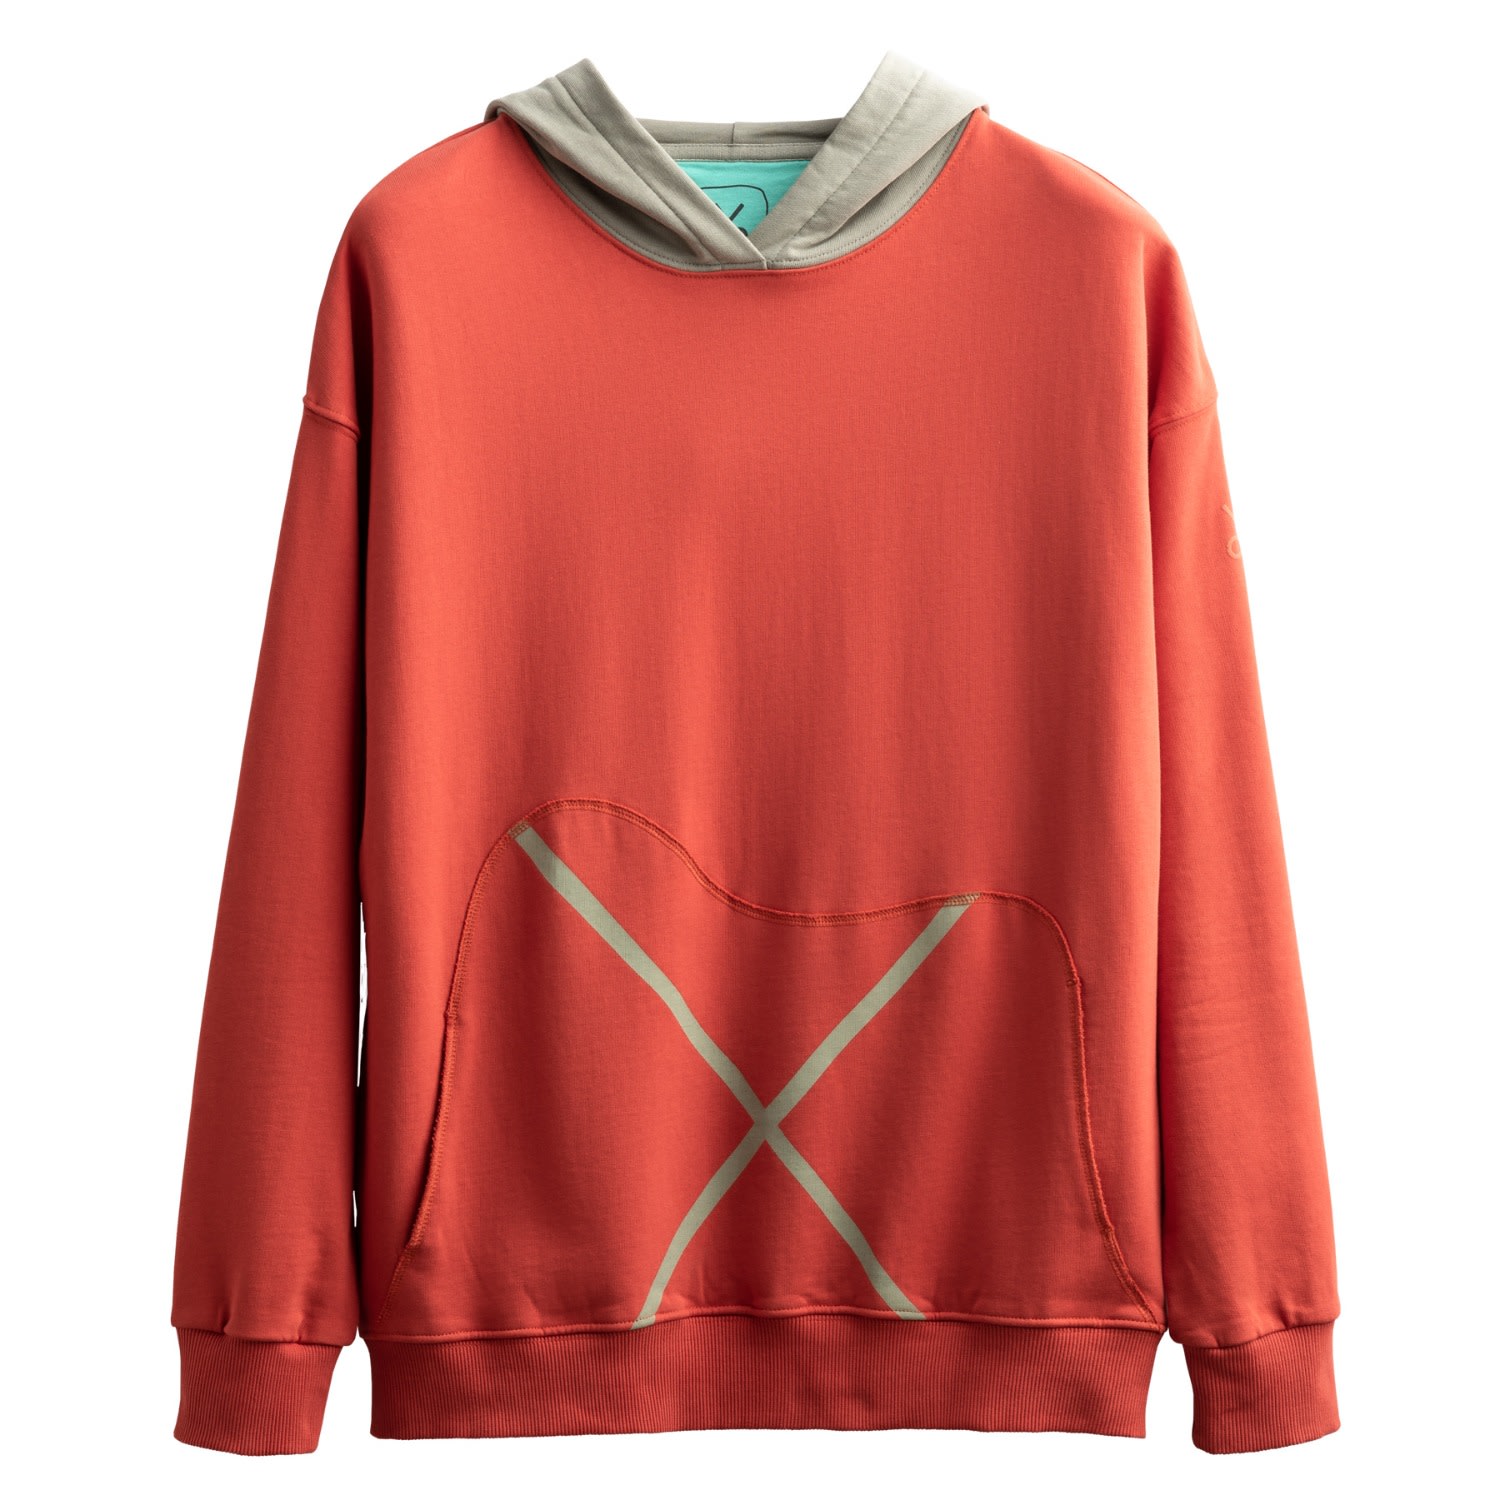 Men's Red Unisex Design Hoodie Sweatshirt - Xpocket - Coral Extra Small KAFT